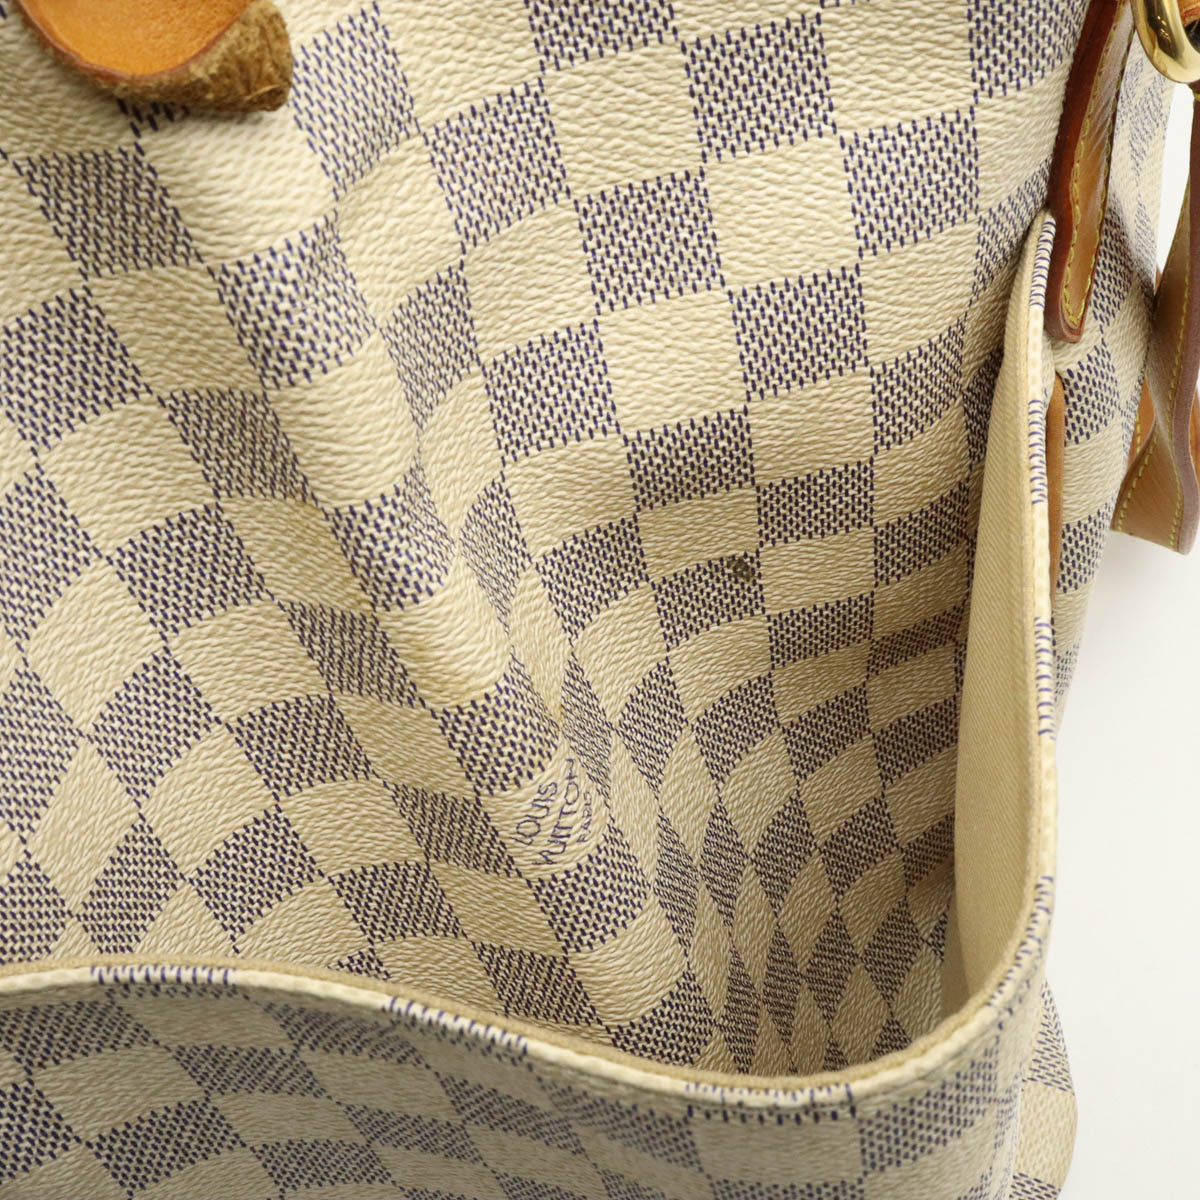 Louis Vuitton Damier Azur Totally MM tote bag N51262